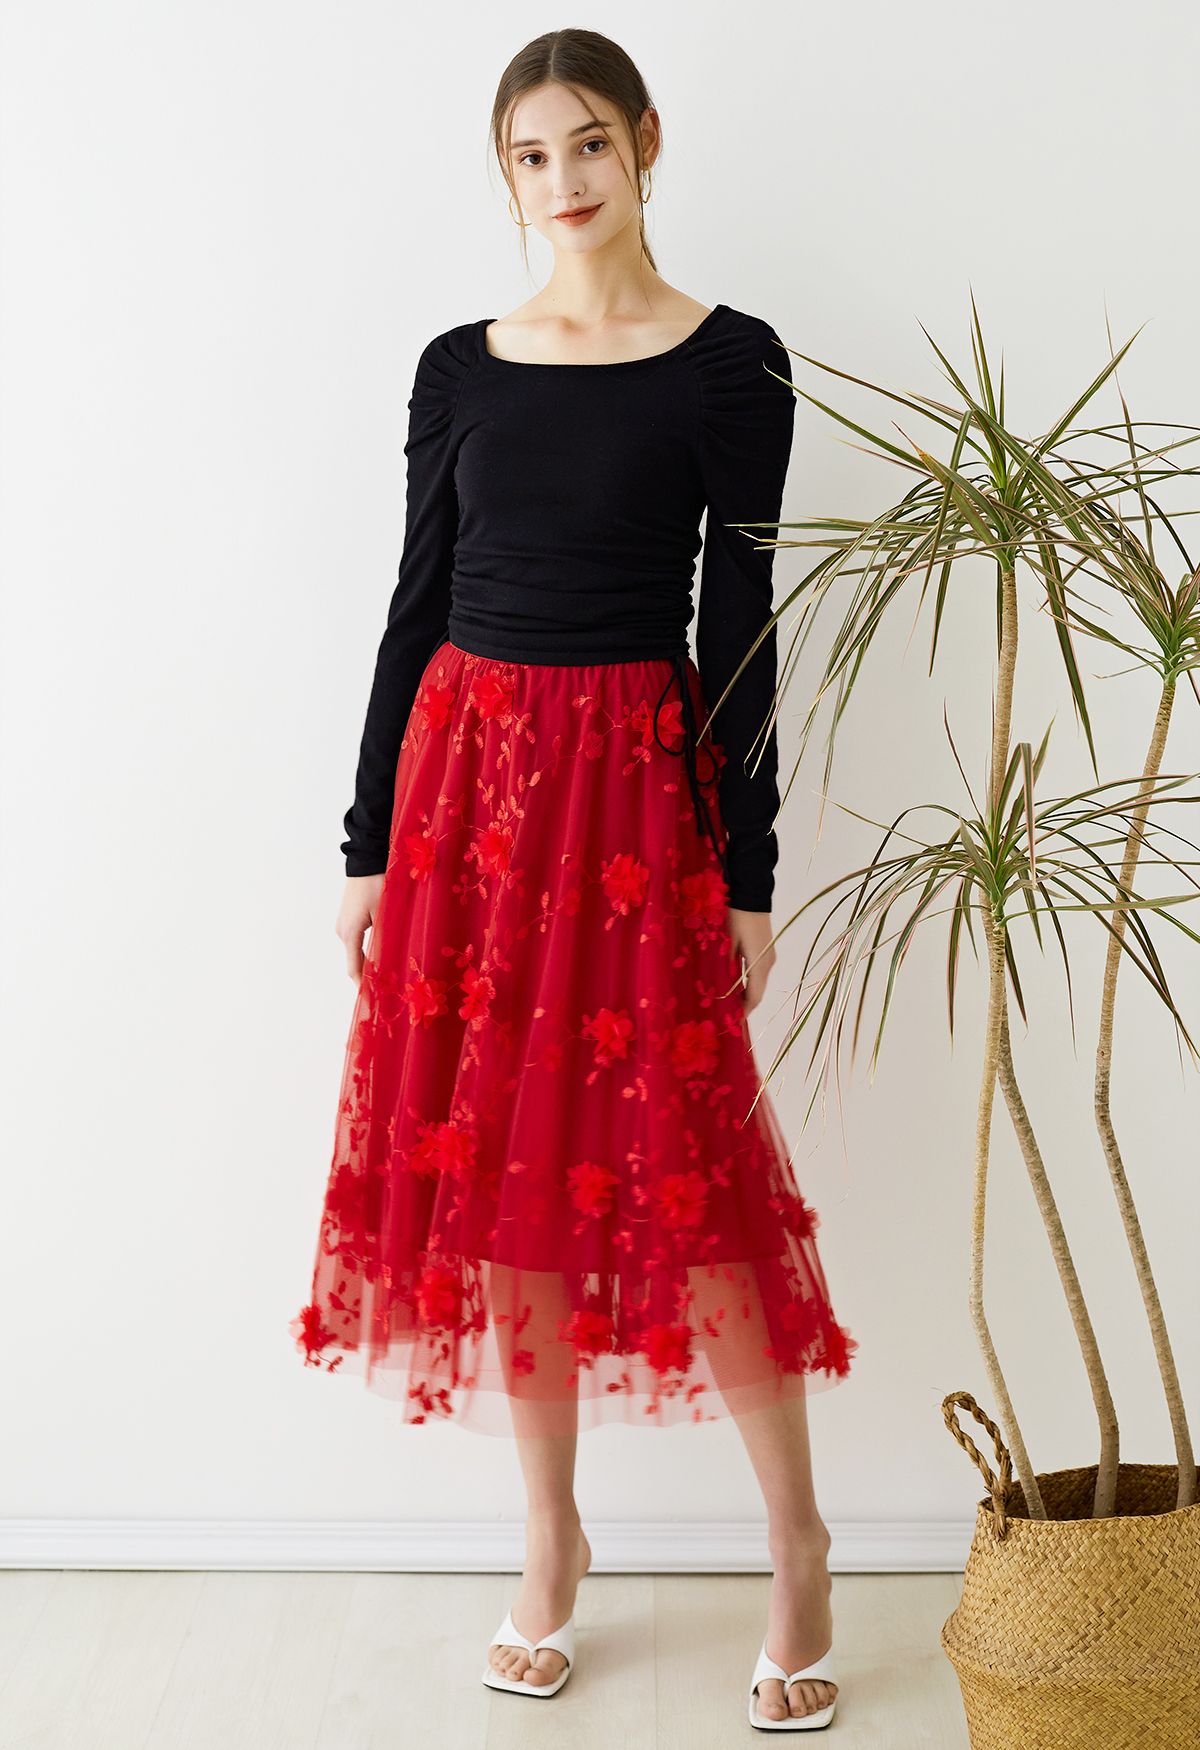 3D Mesh Flower Embroidered Tulle Midi Skirt in Red